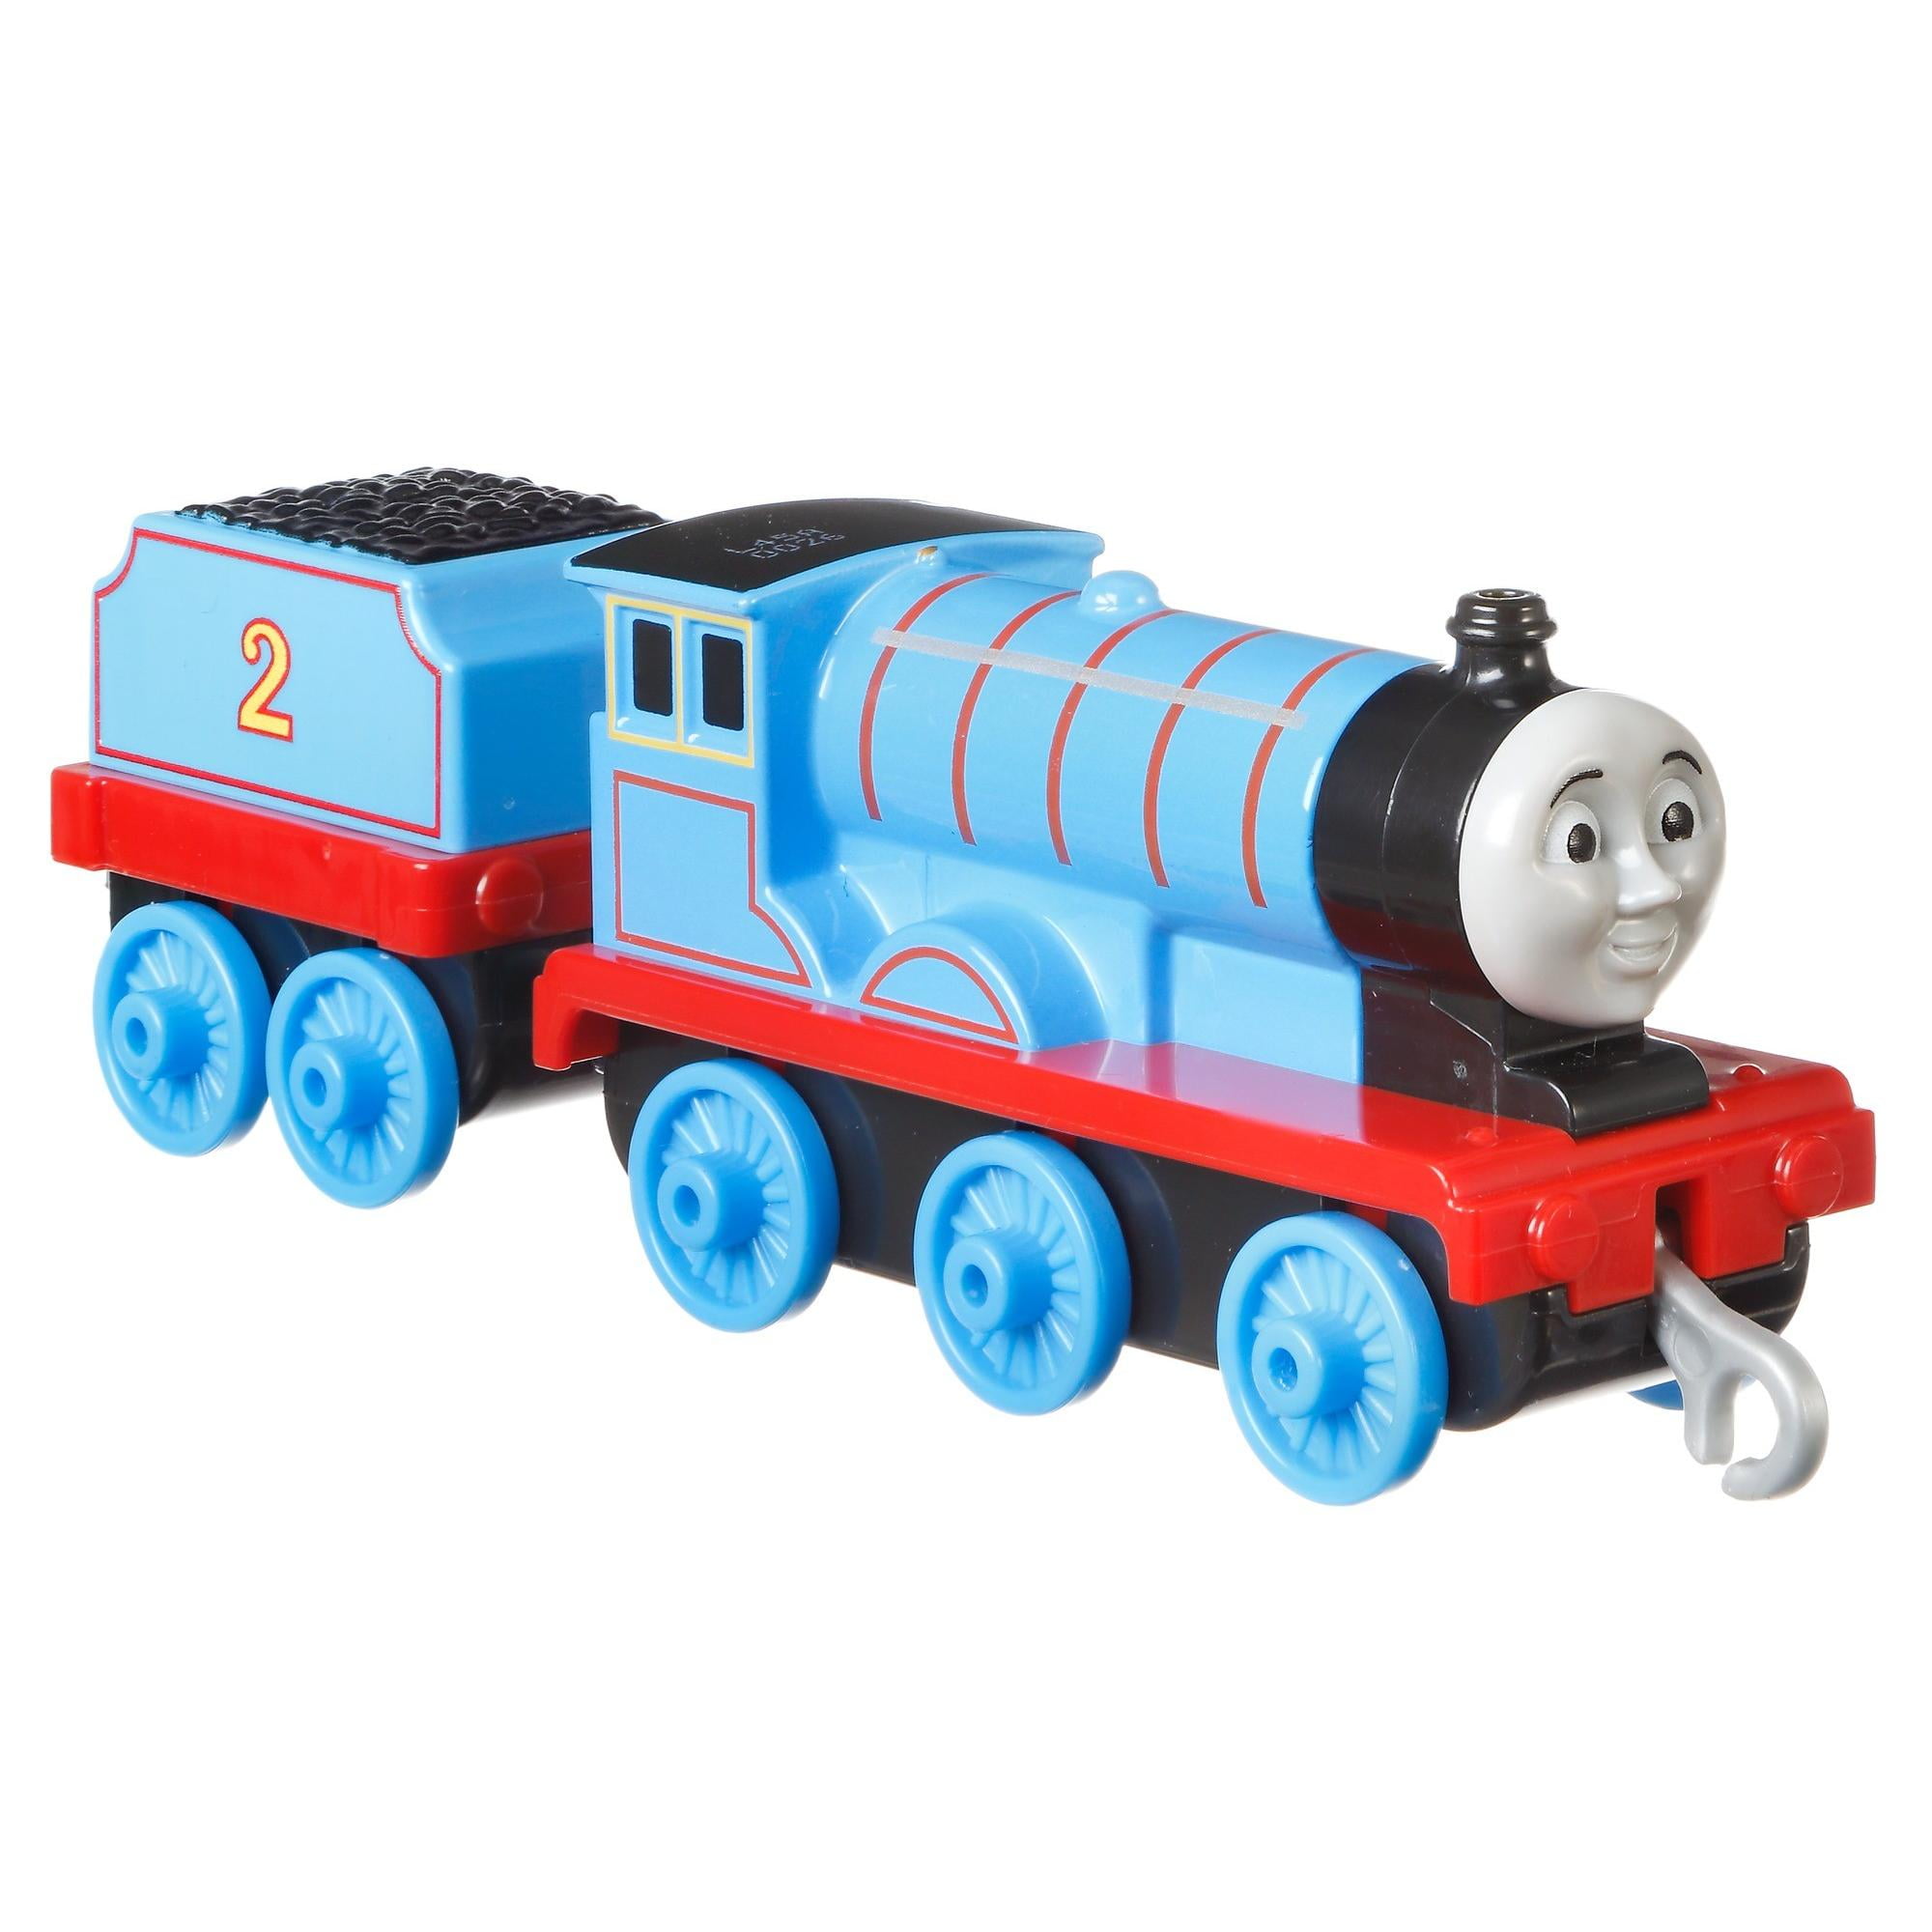 Percy Push Along Metal Train Engine Thomas & Friends 